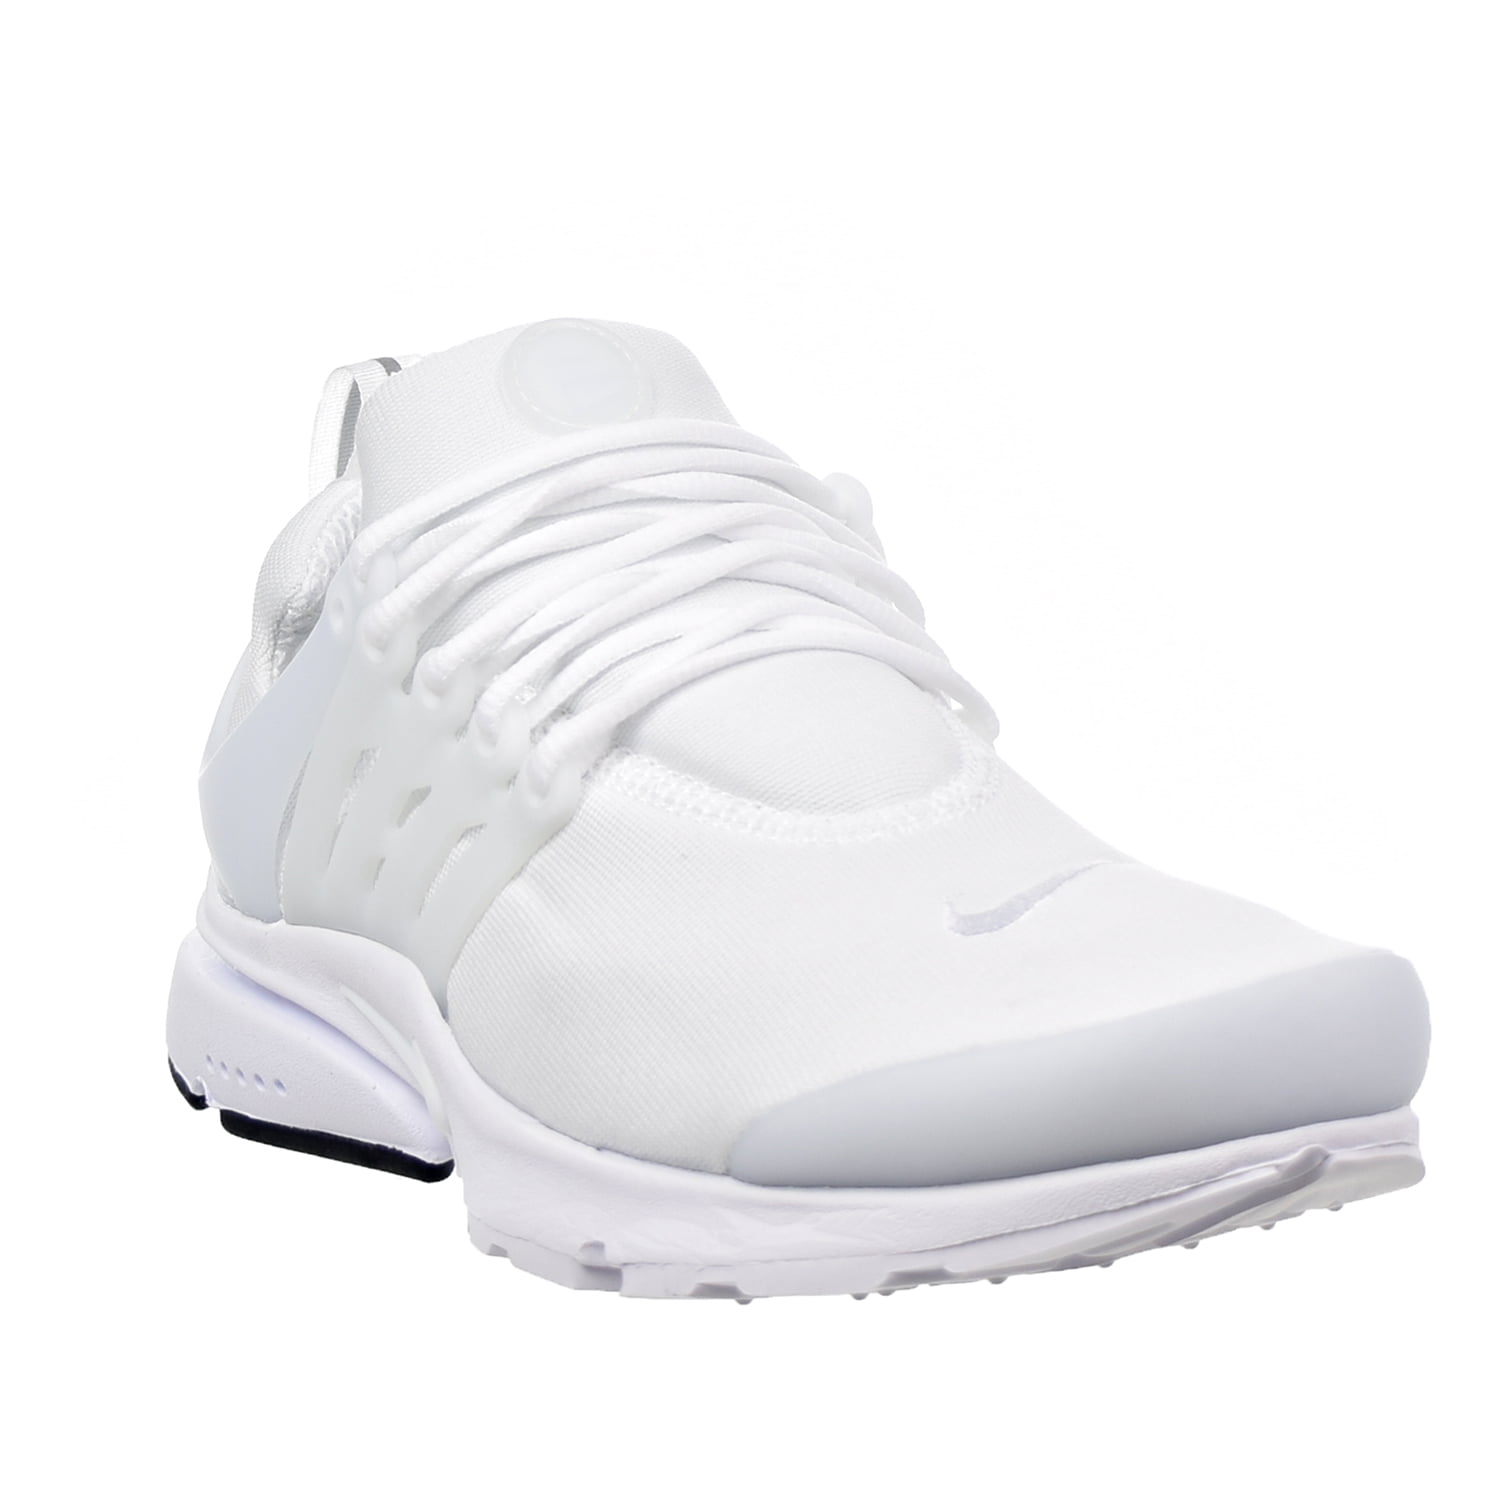 personaje Vamos persuadir Nike Air Presto Essential Men's Shoes White/Black 848187-100 - Walmart.com